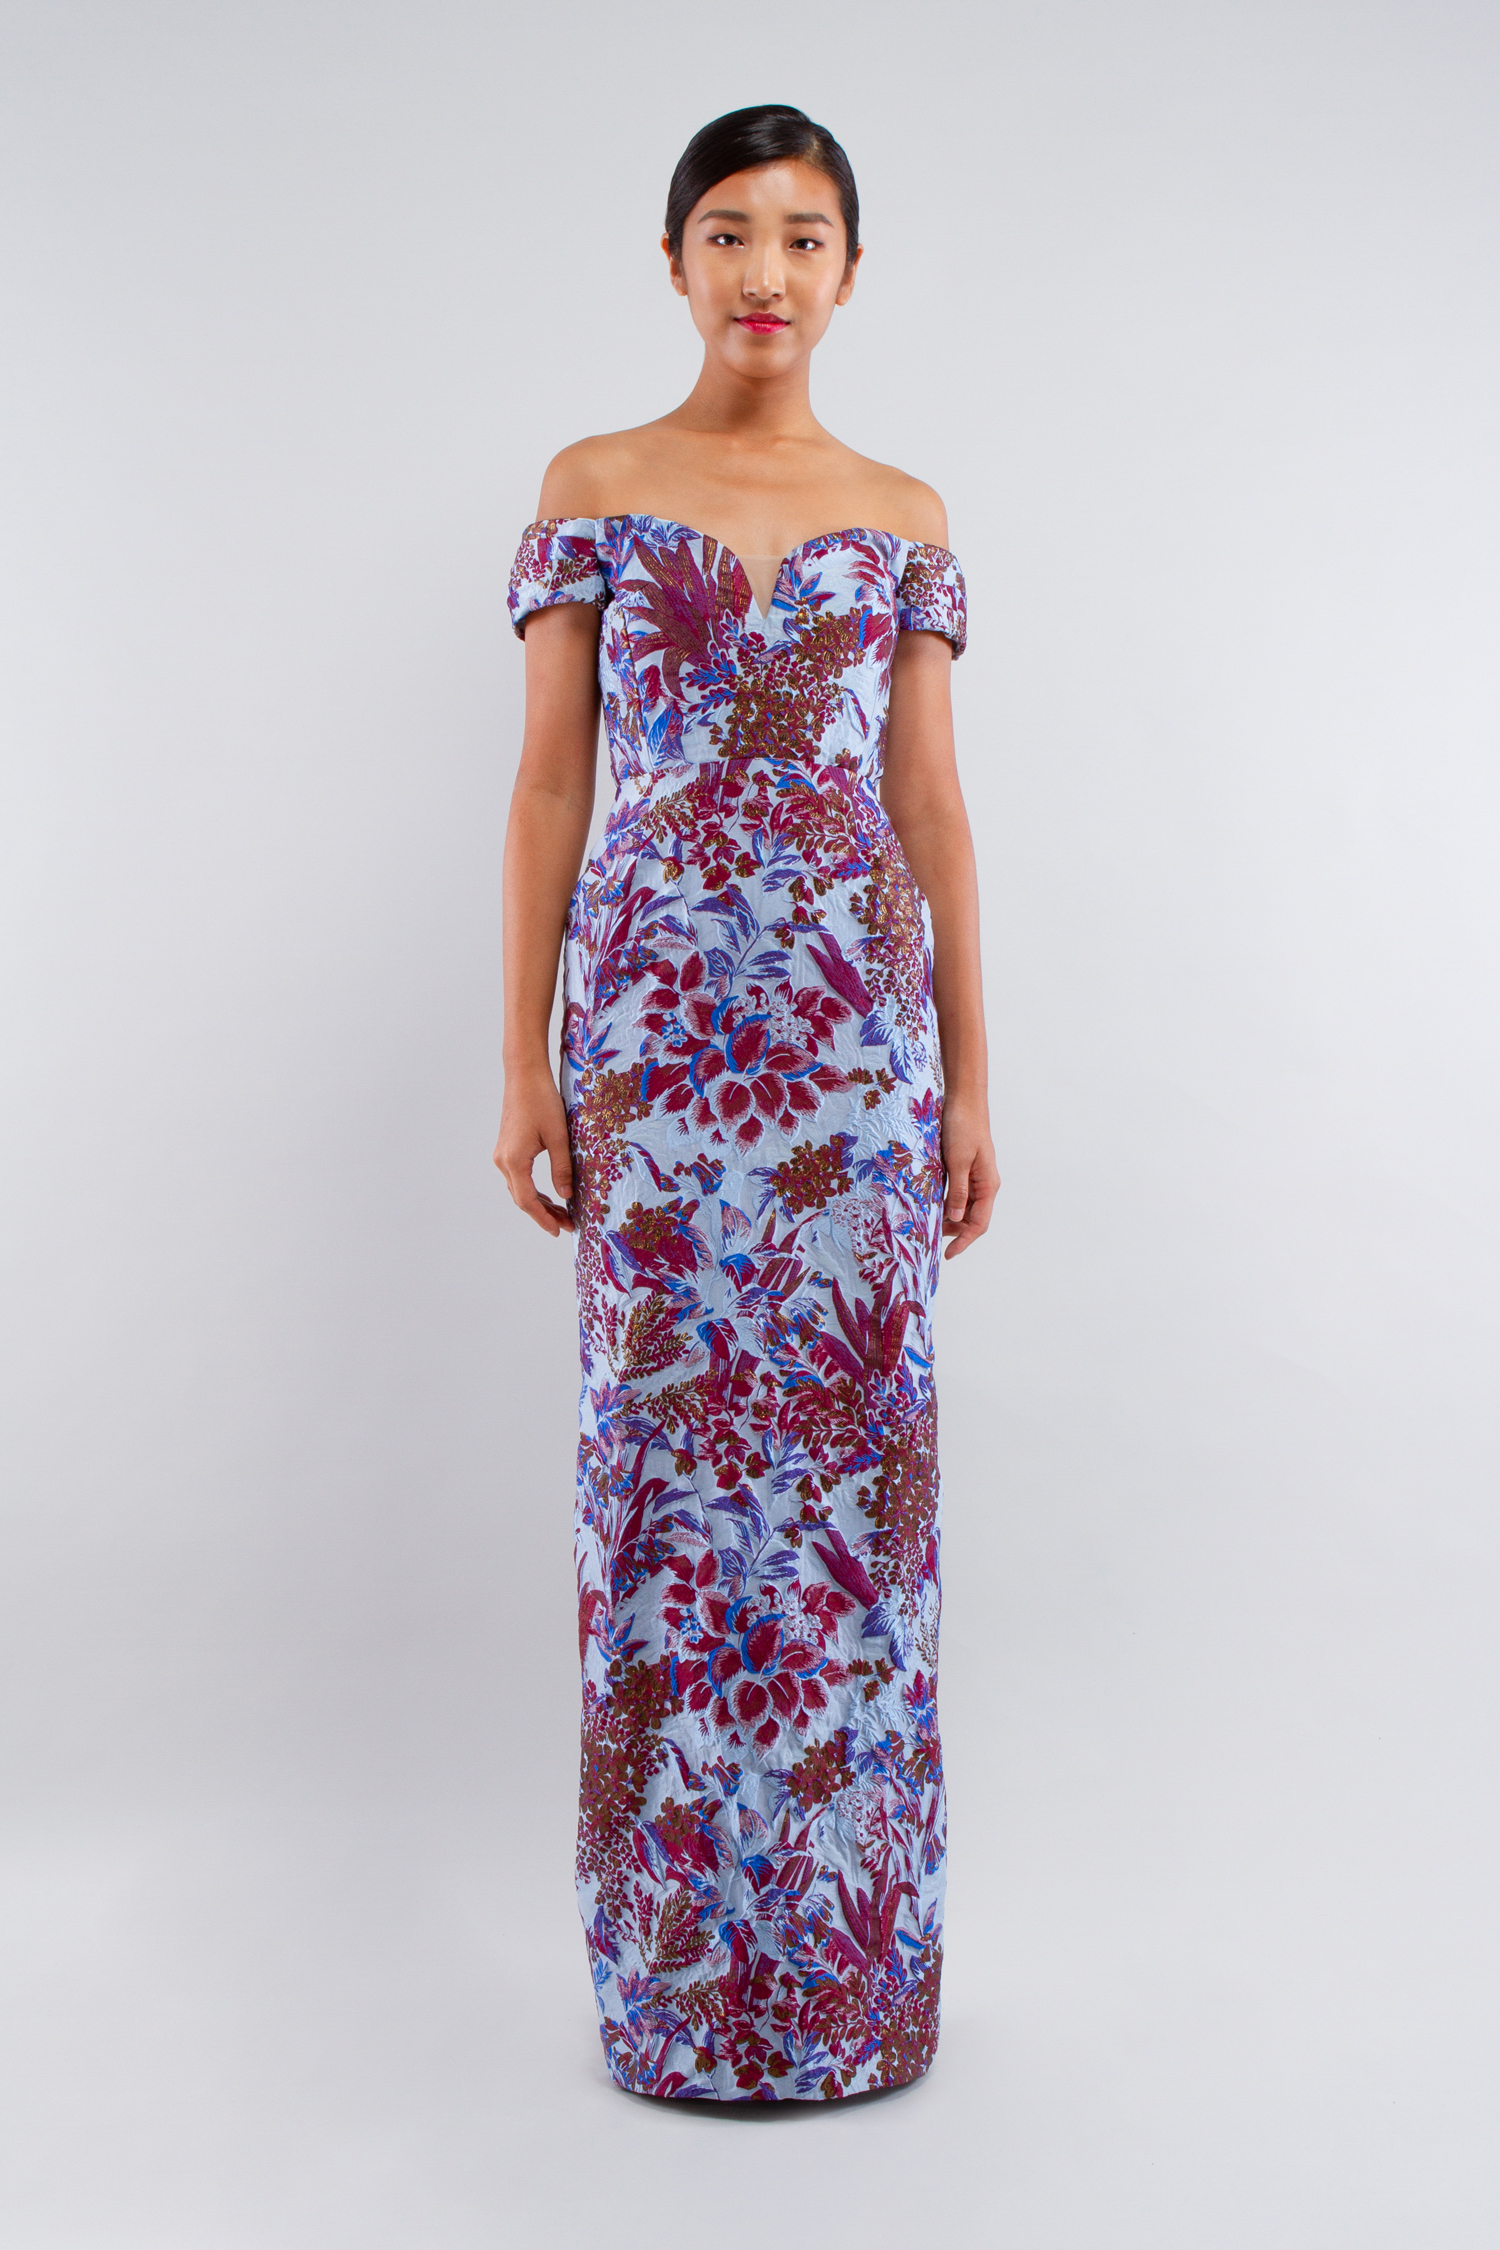 Botanical Brocade strapless column dress with princess side slit - Believe Look 1 - Verdin New York